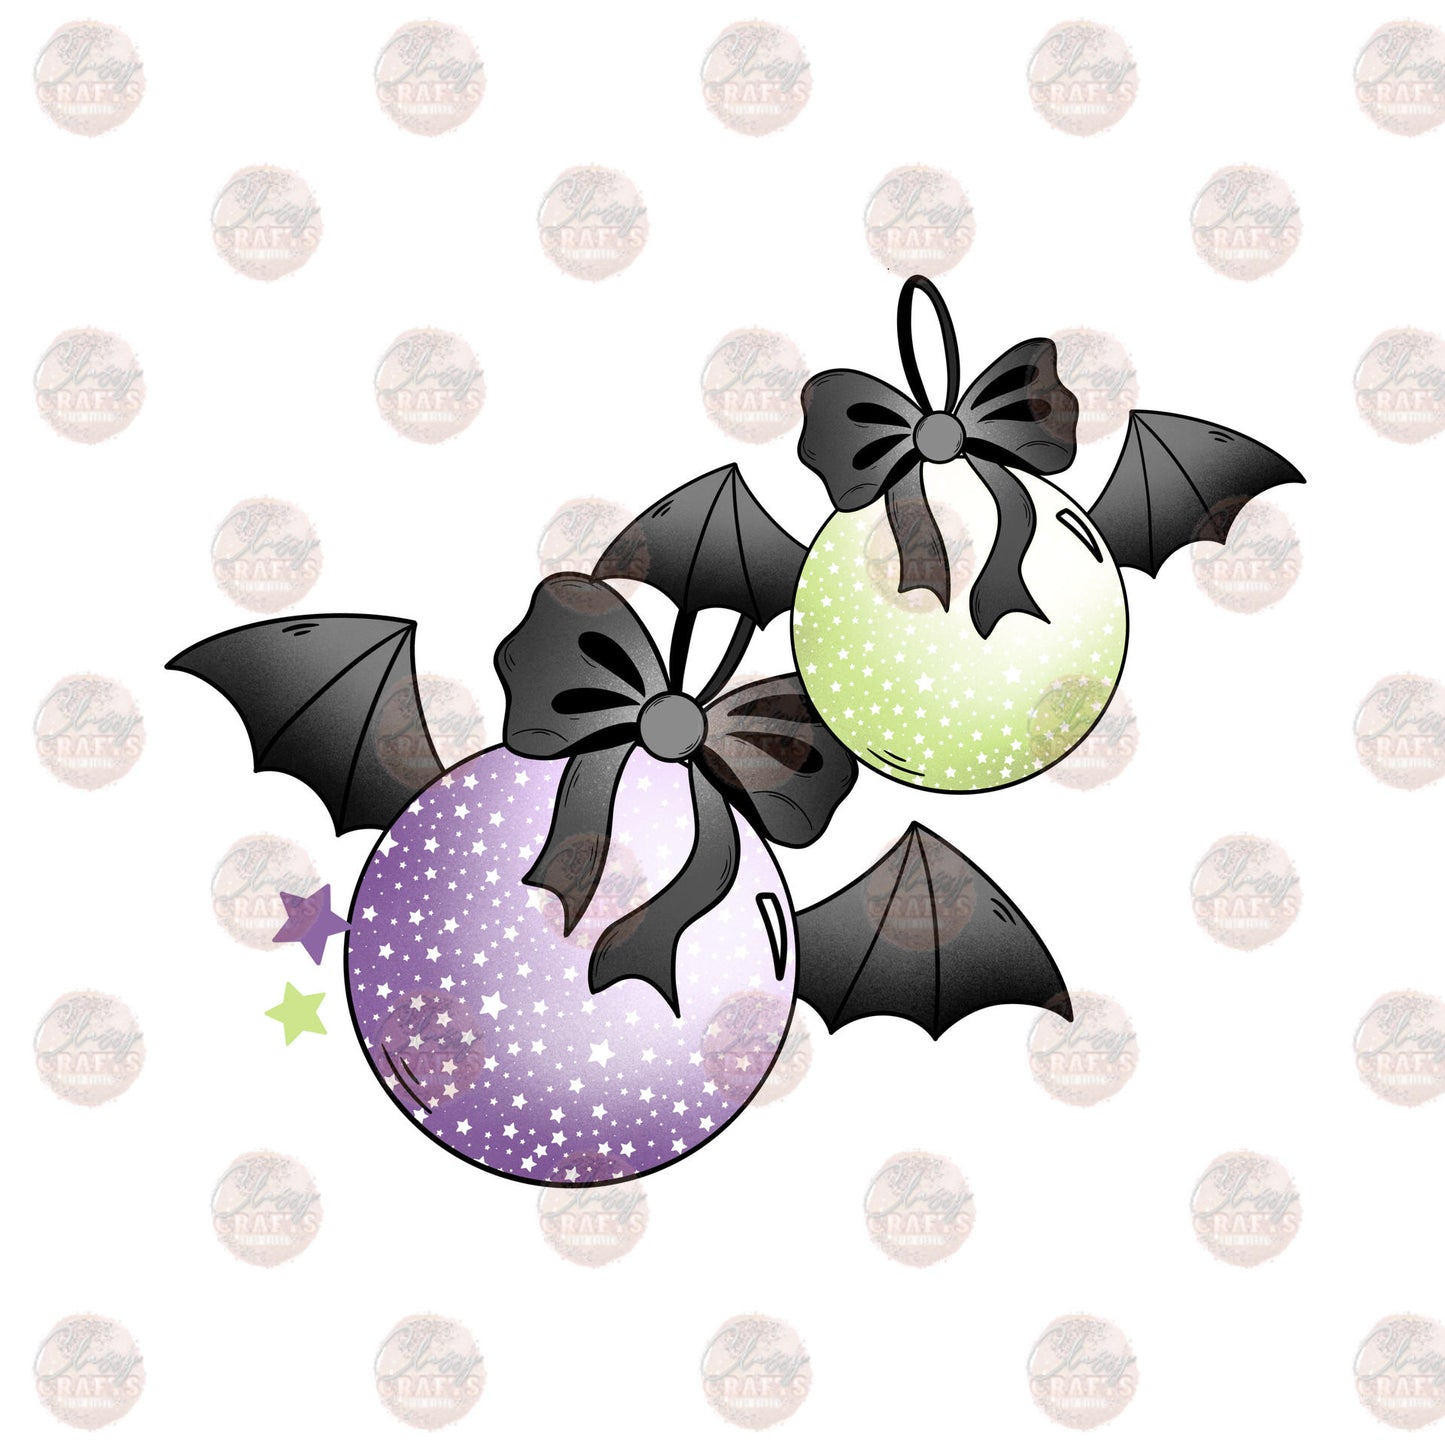 Batty Ornaments - Sublimation Transfer